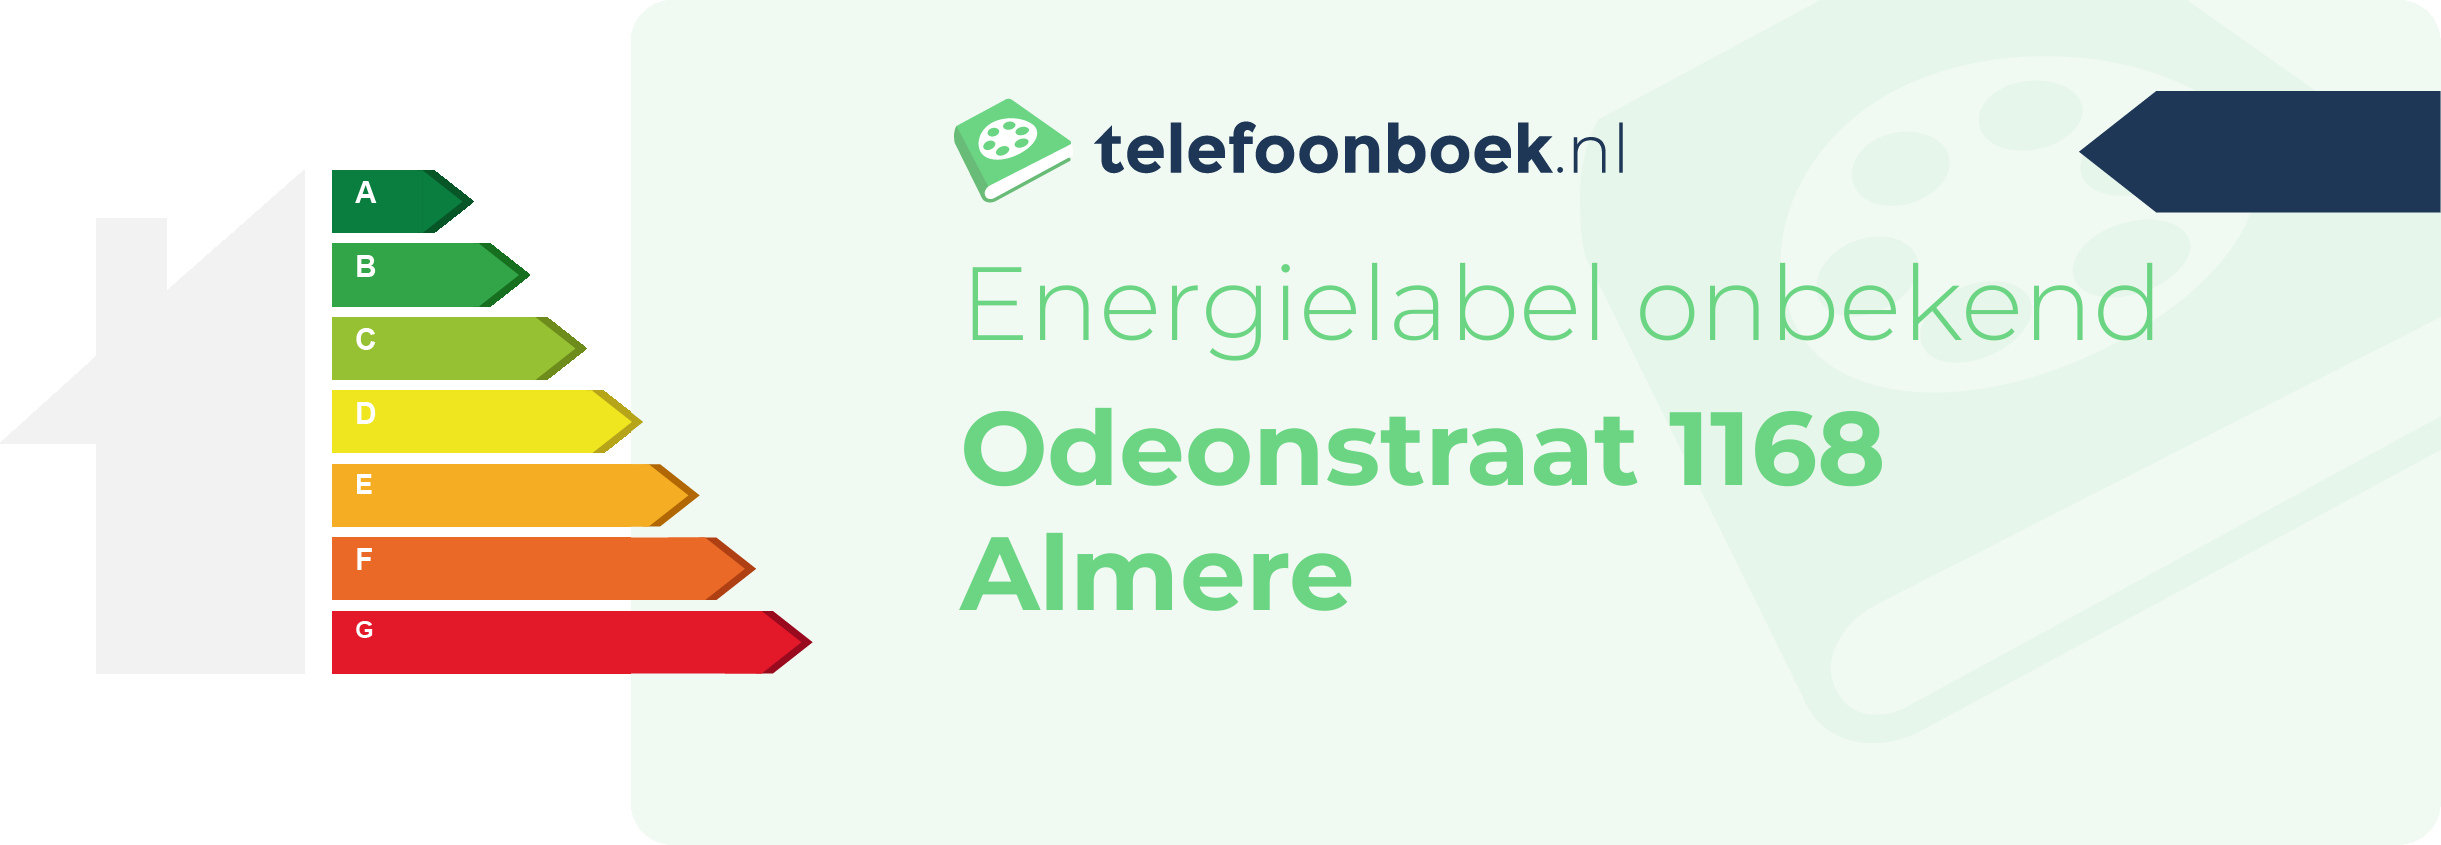 Energielabel Odeonstraat 1168 Almere